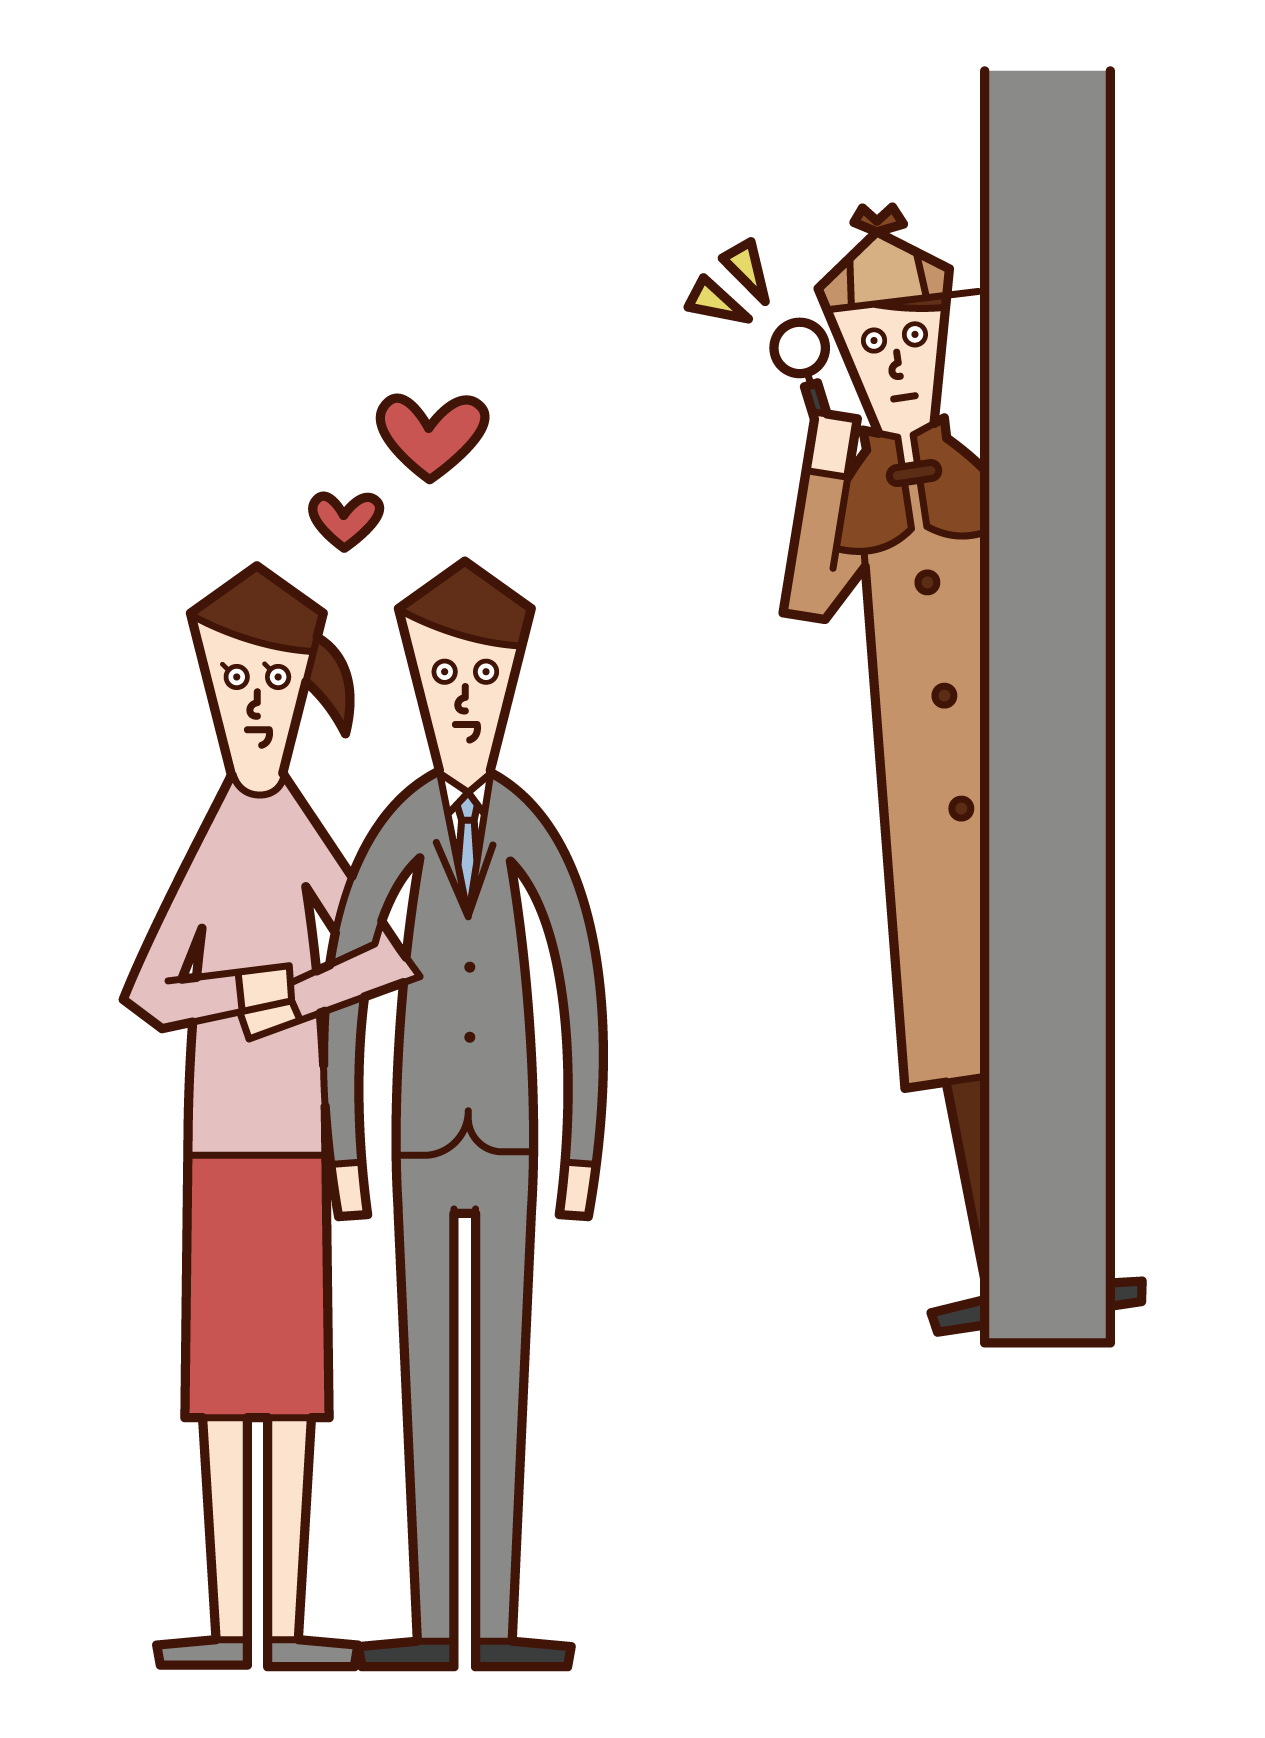 Illustration of a detective (man) investigating infidelity